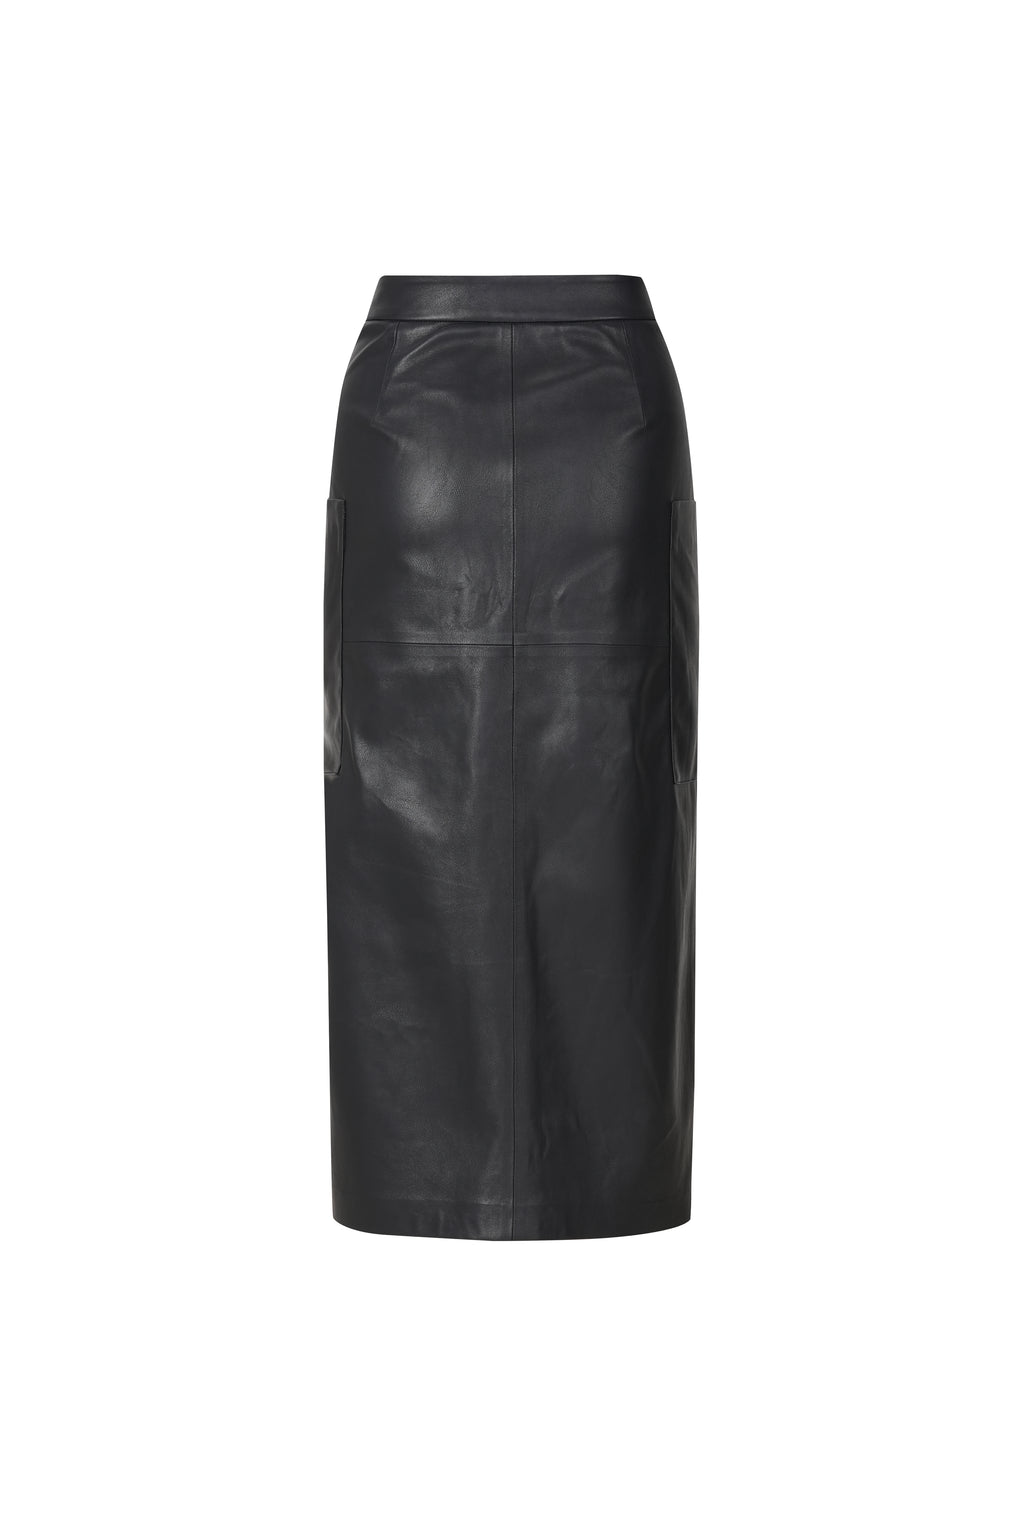 Patch Pocket Meringue Skirt